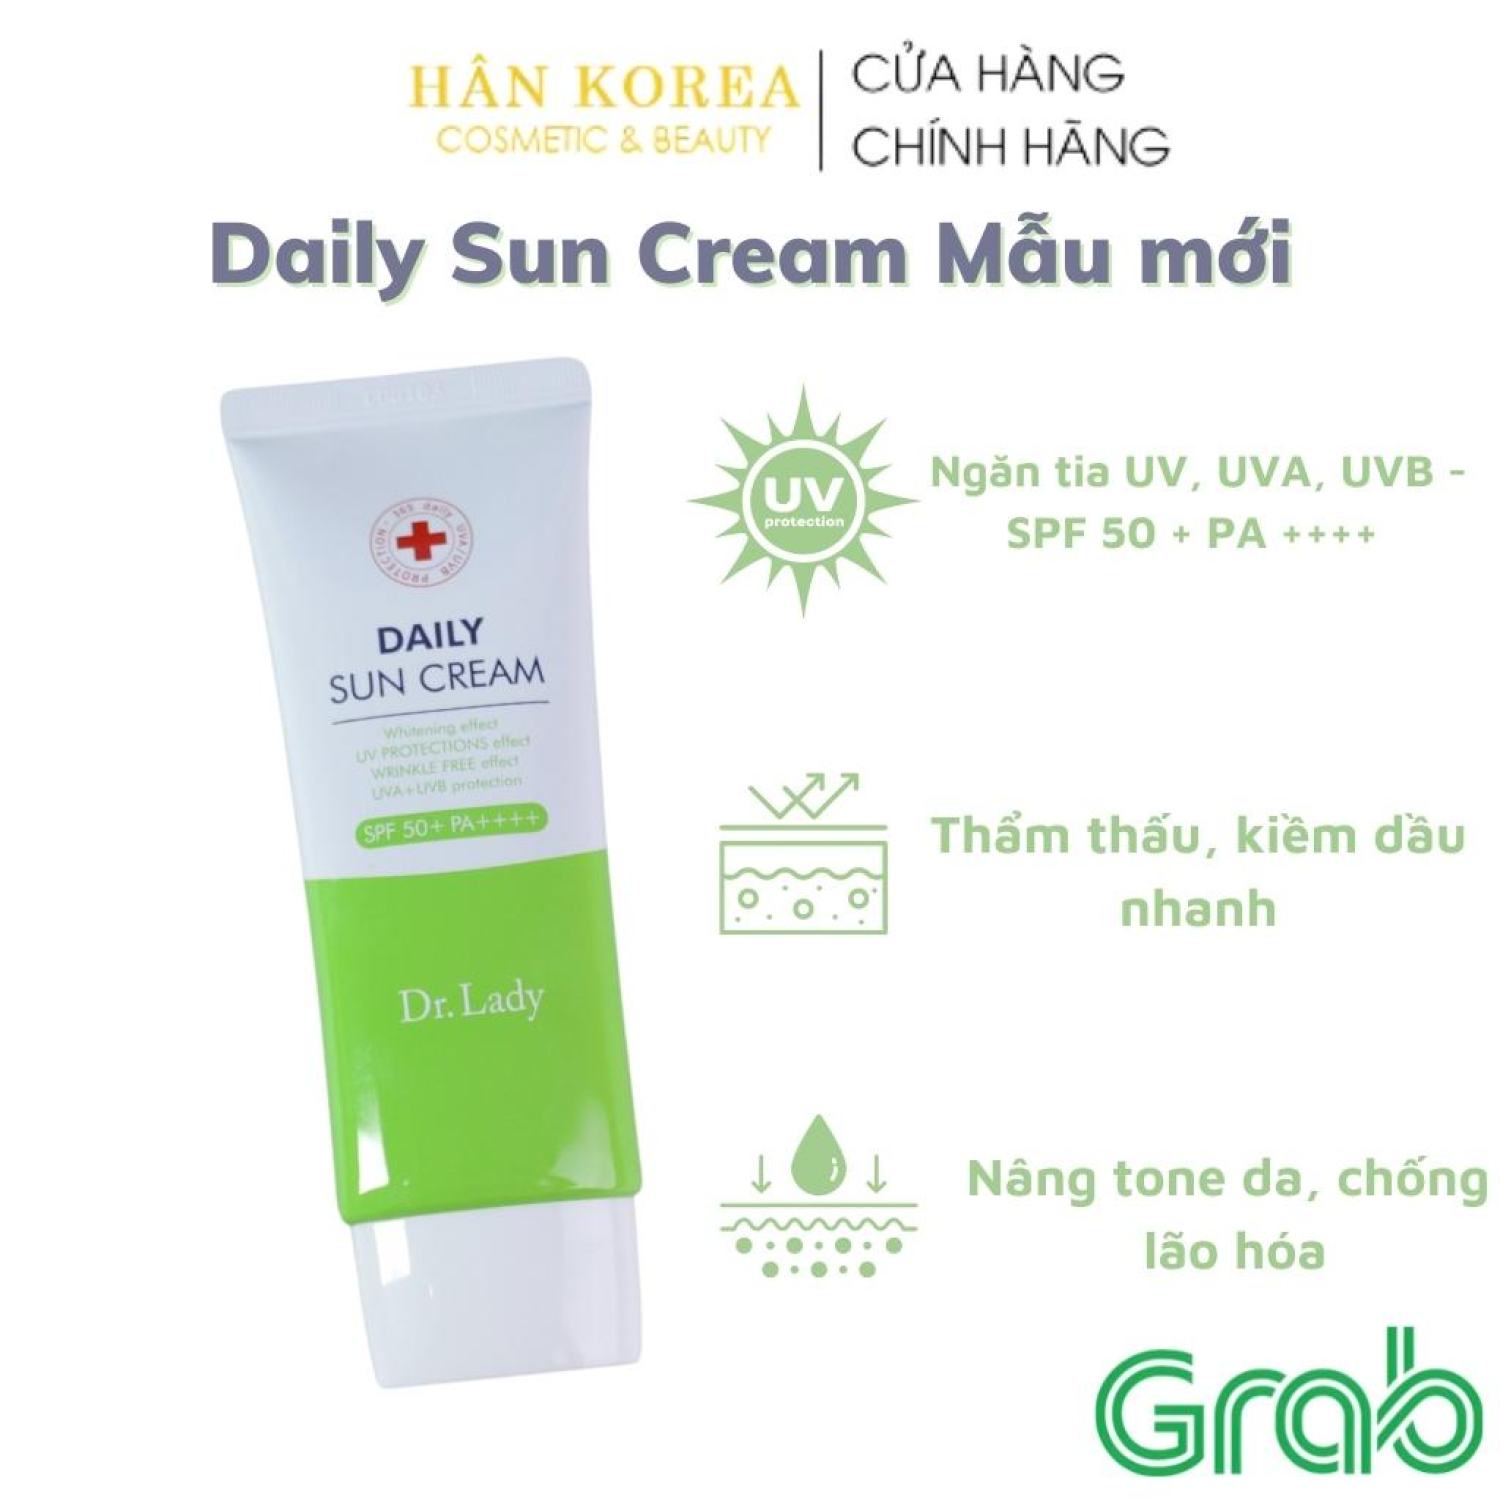 Daily sun cream - mẫu mới - 3 in 1 spf50+ pa ++++ 60ml - ảnh sản phẩm 1